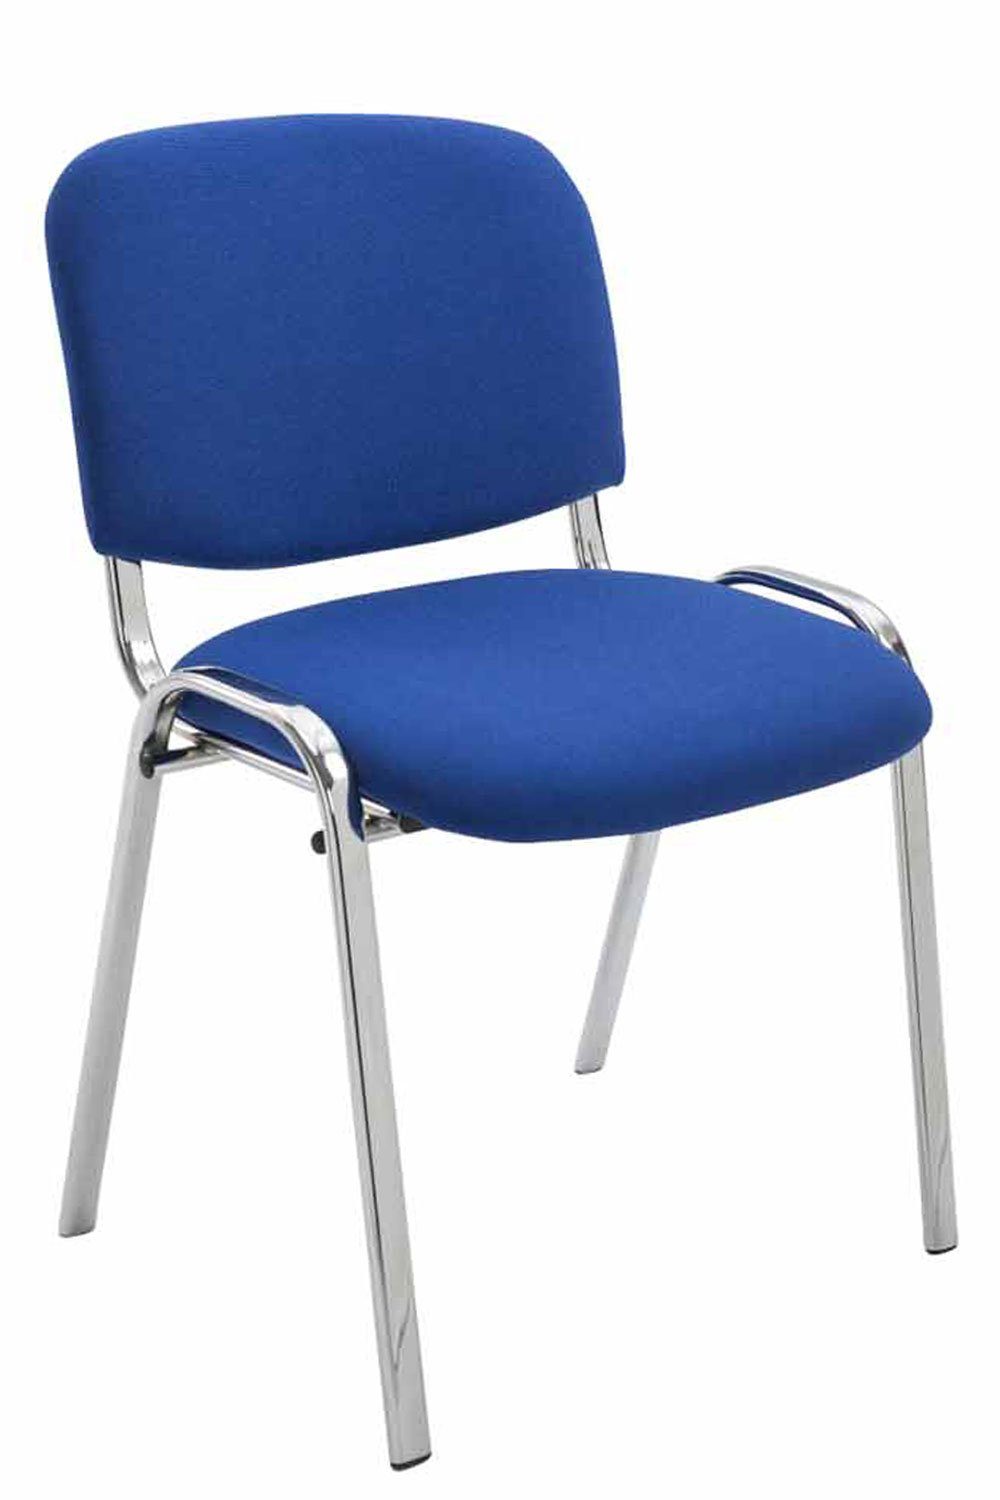 Keen Metall Stoff chrom hochwertiger Polsterung blau mit Konferenzstuhl TPFLiving Messestuhl), Besucherstuhl - - - - Gestell: Warteraumstuhl (Besprechungsstuhl Sitzfläche: